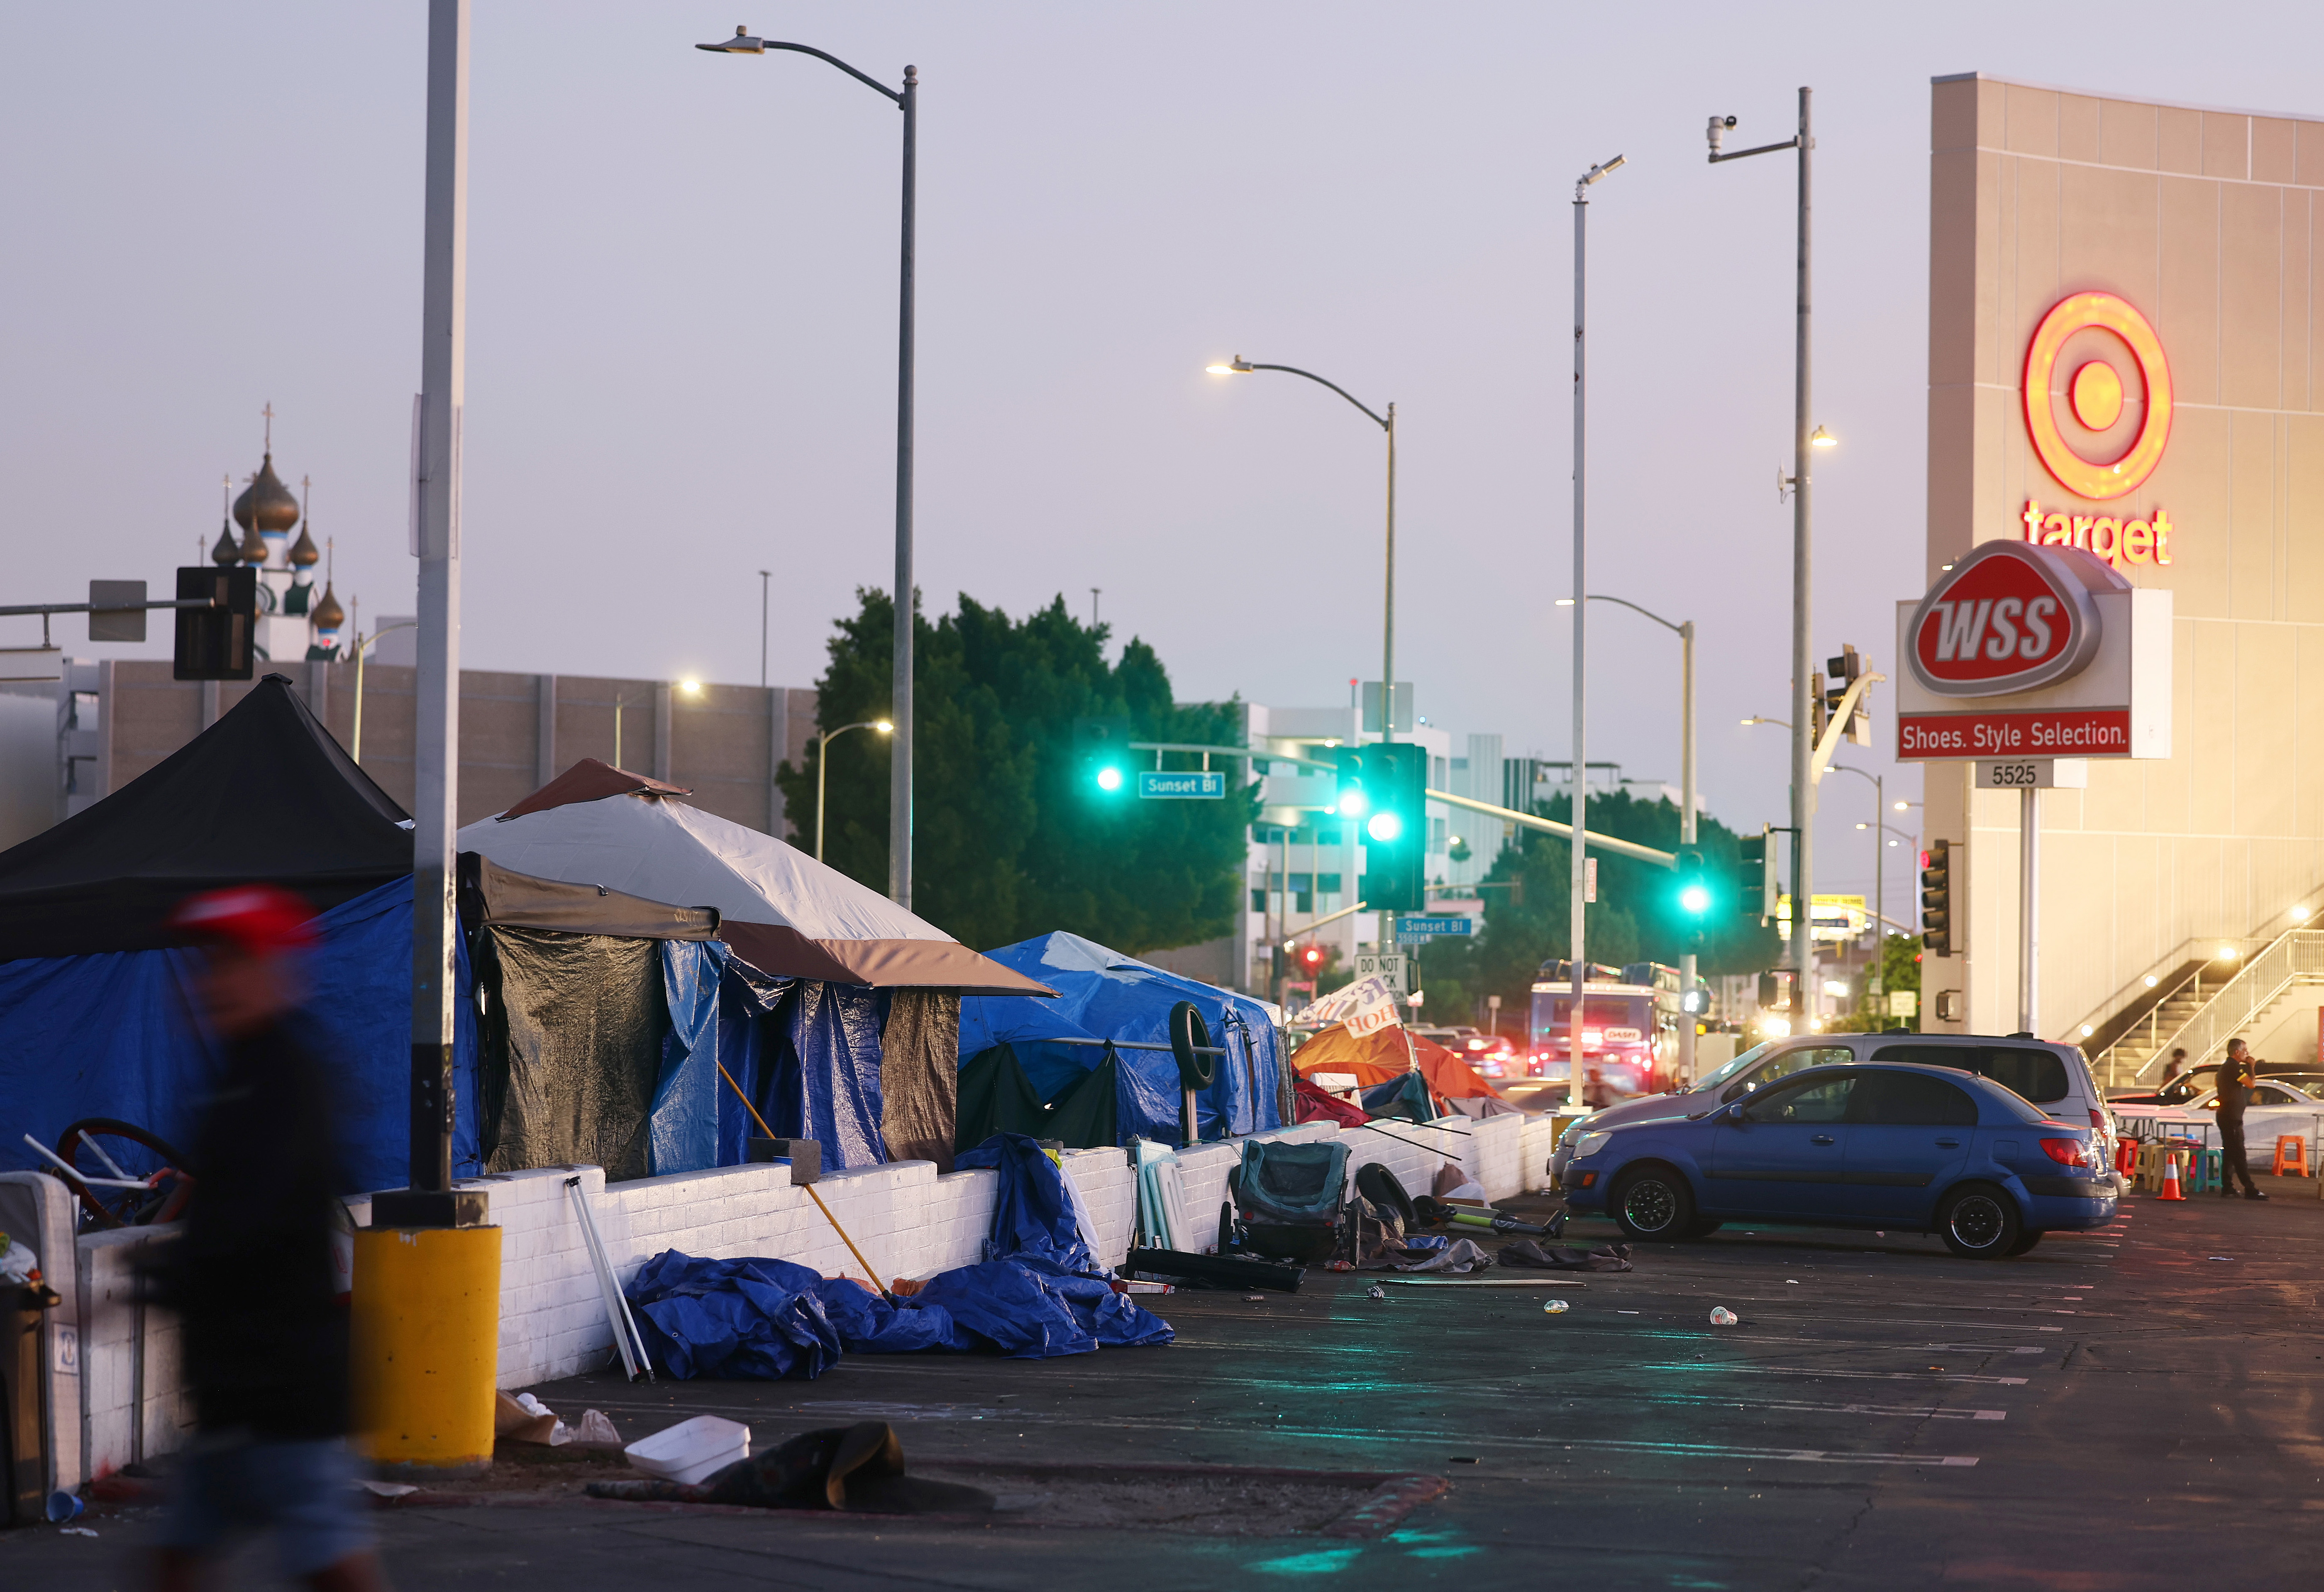 A person walks past a homeless encampment